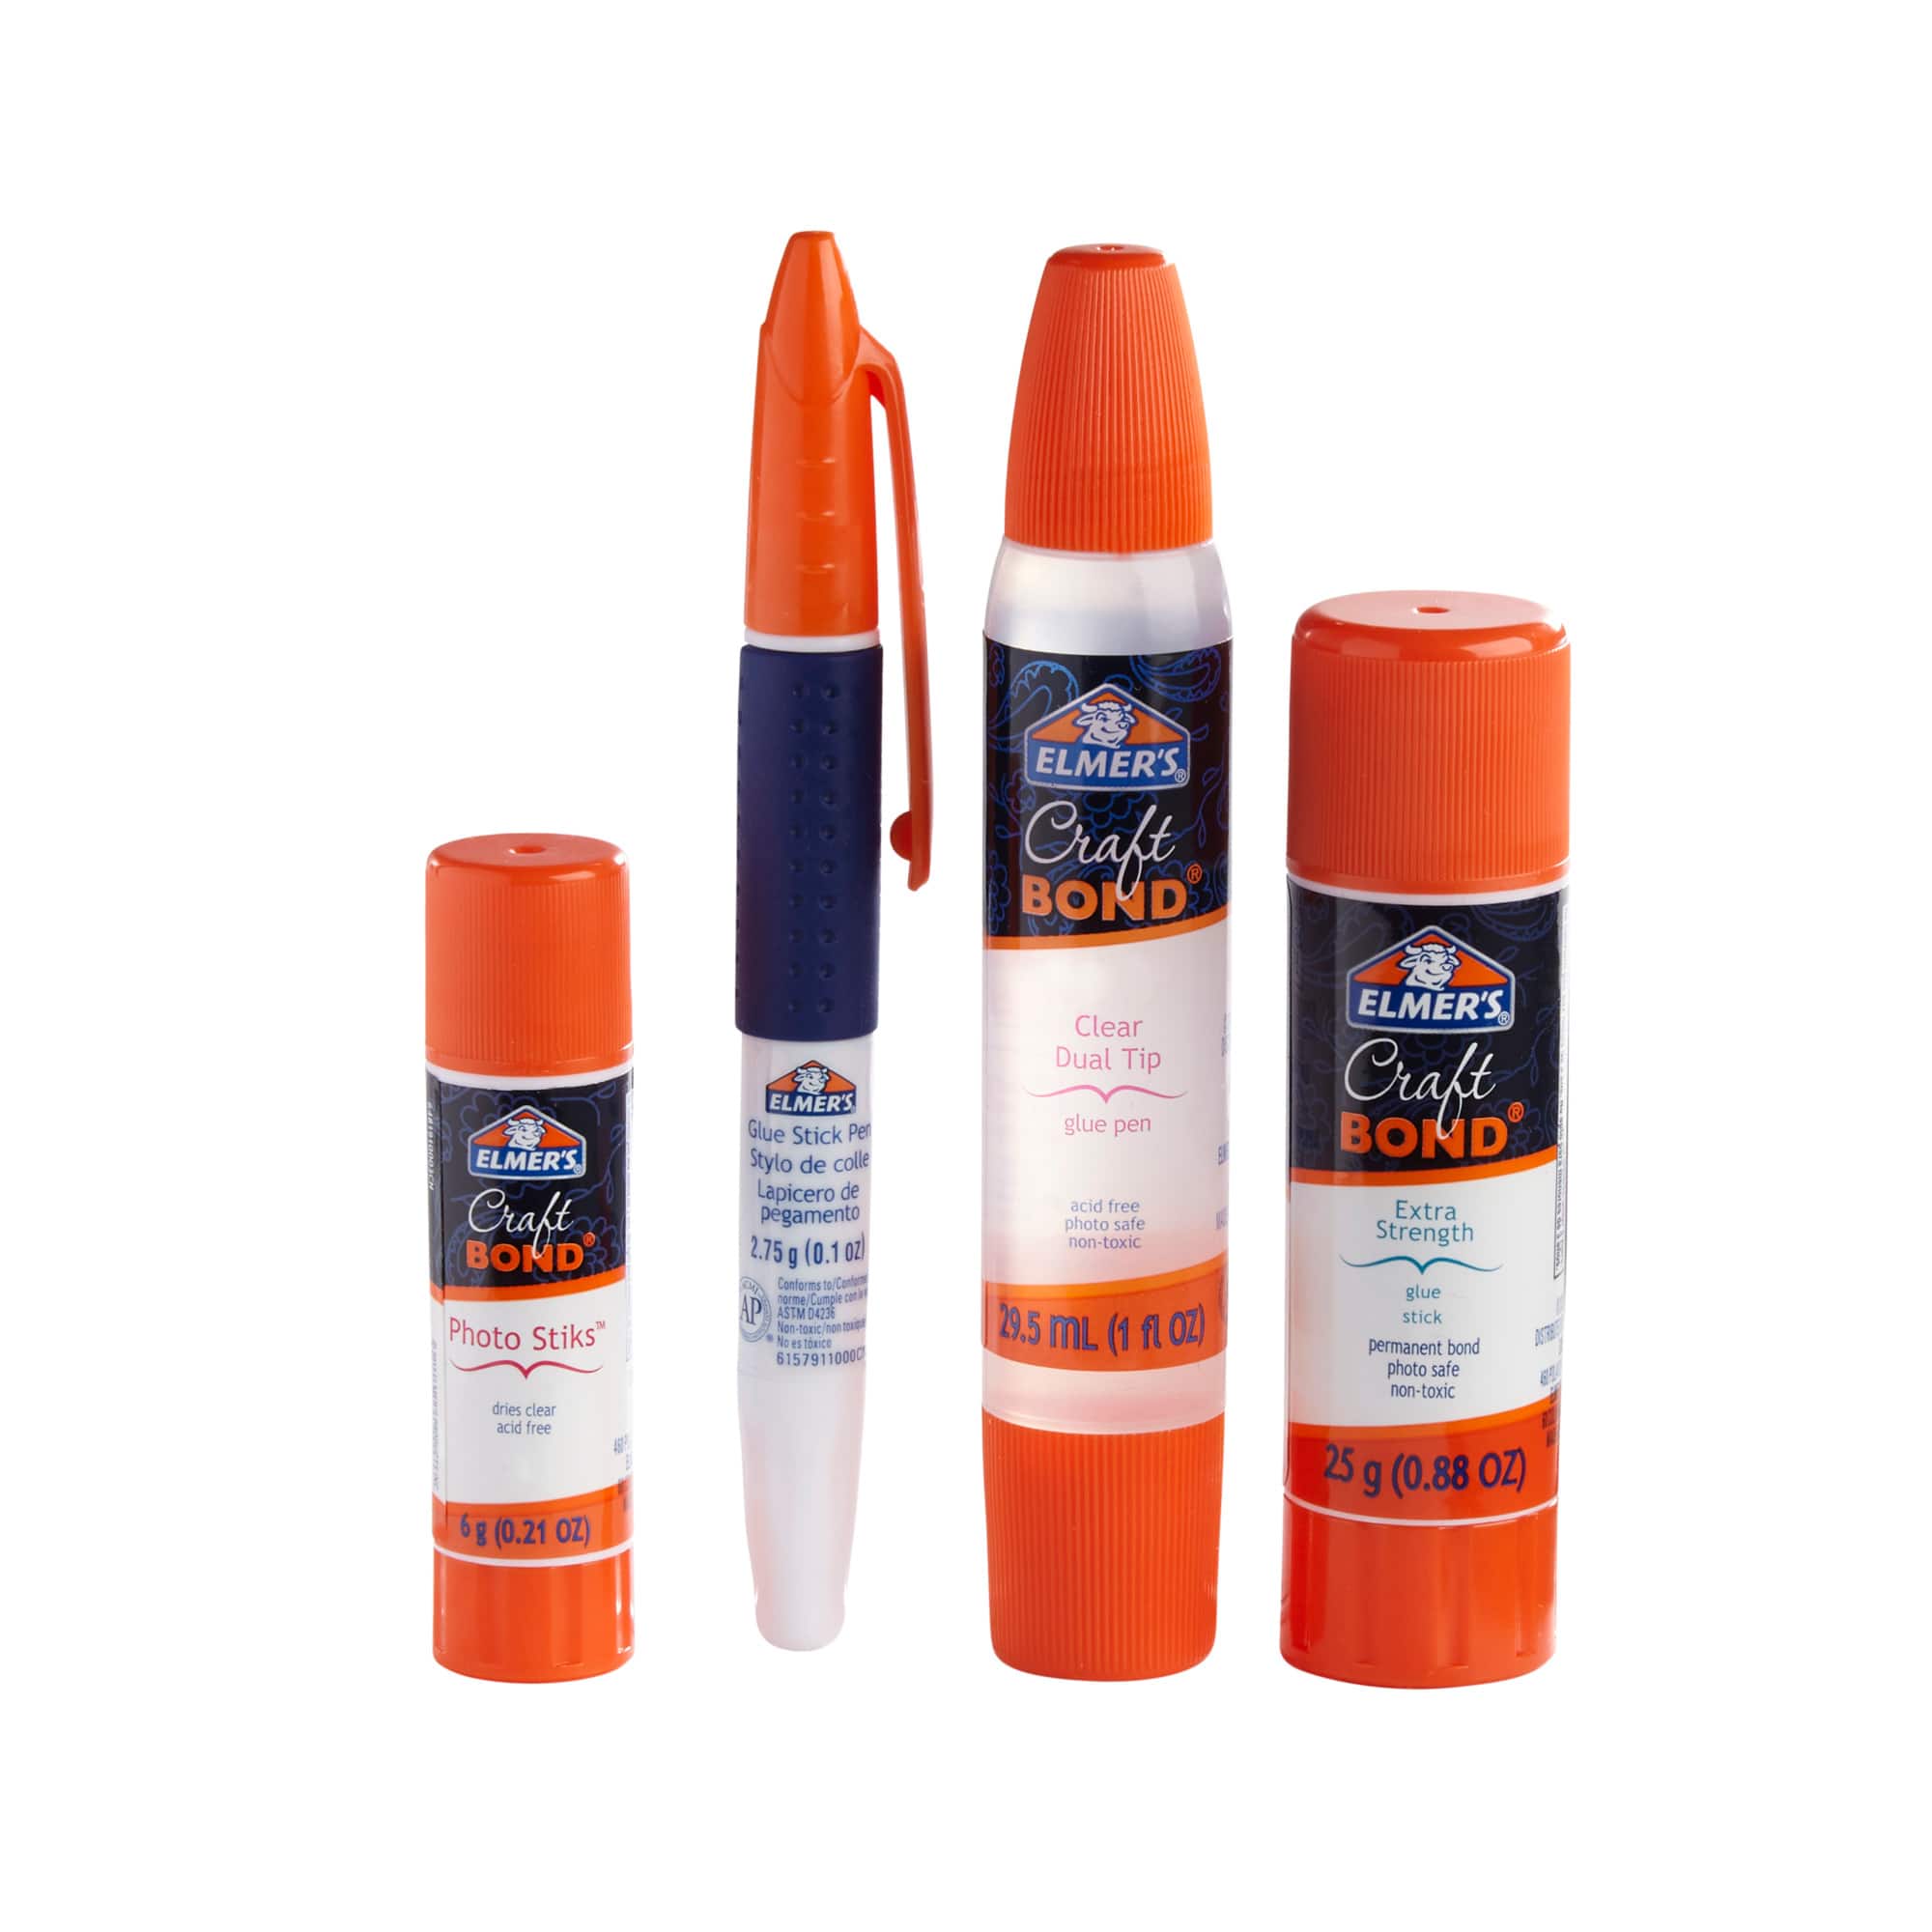 Extra-Strength School Glue Sticks, 0.21 oz, Dries Clear, 60/Pack